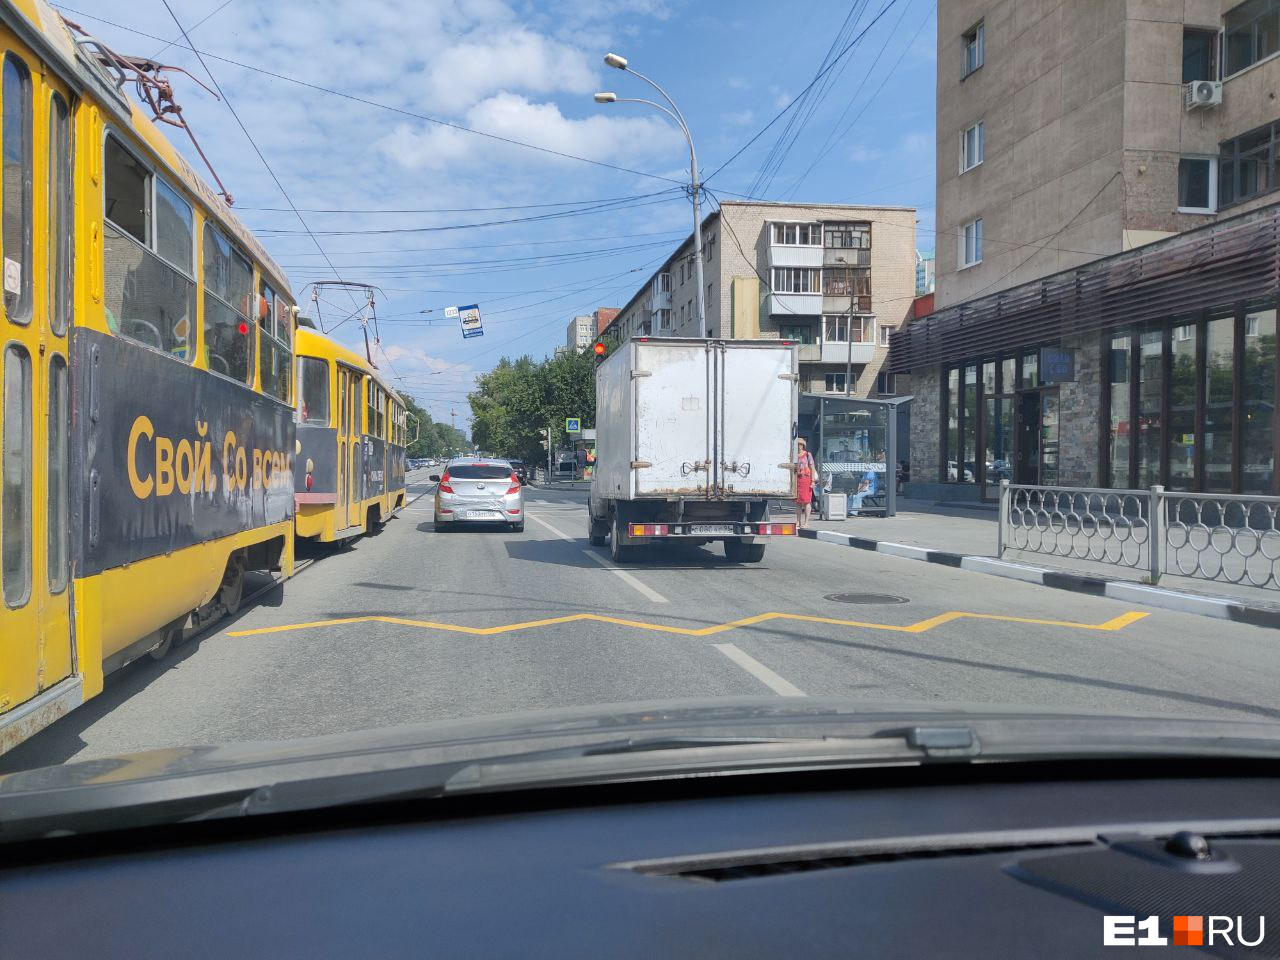 На дорогах Екатеринбурга заметили желтый зигзаг. Объясняем, что он значит